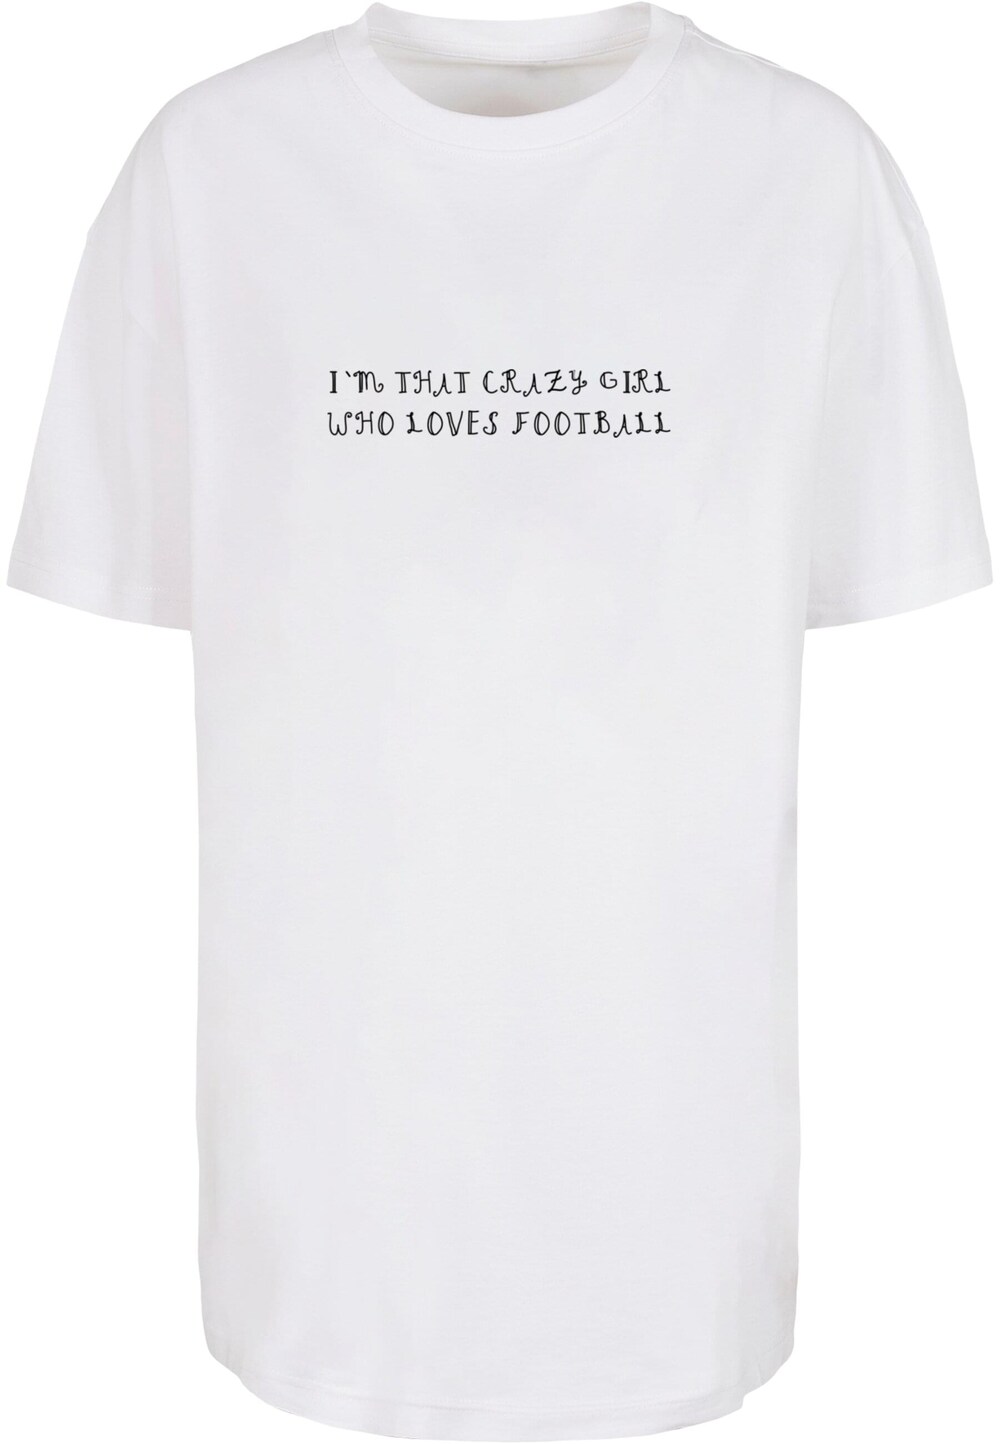 Рубашка Merchcode Crazy Football Girl, белый